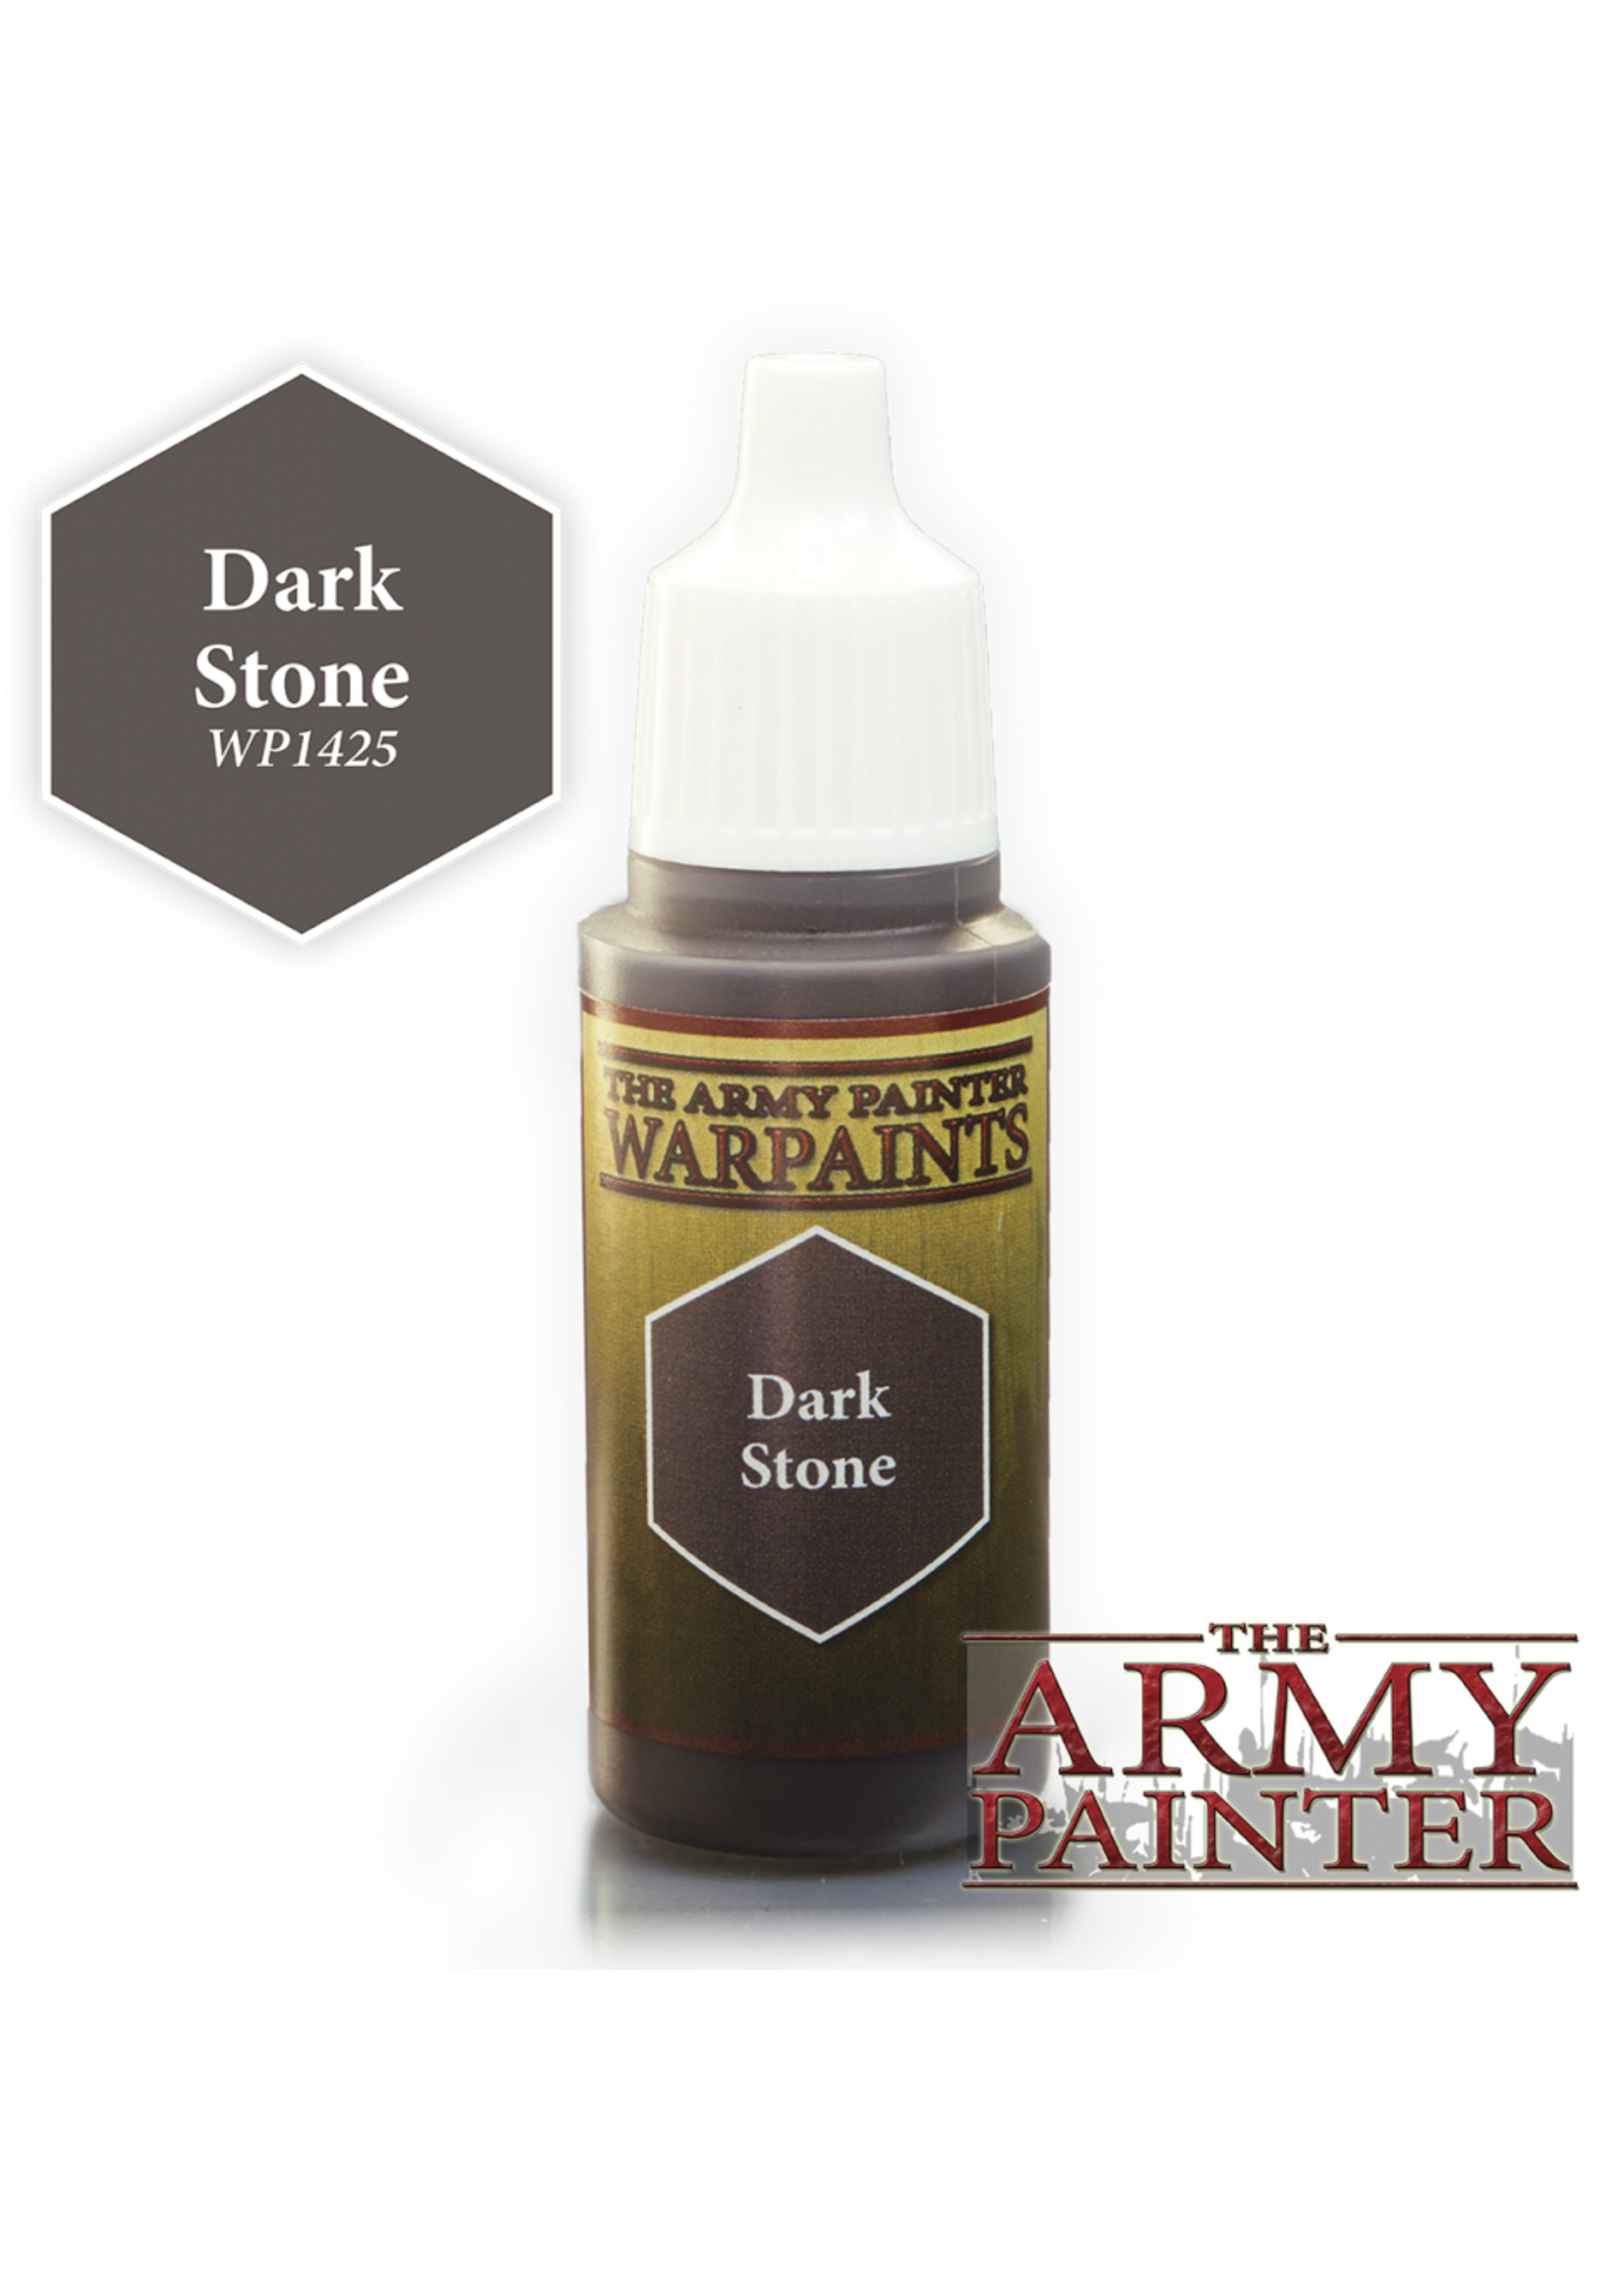 The Army Painter Acrylics Warpaints Dark Stone